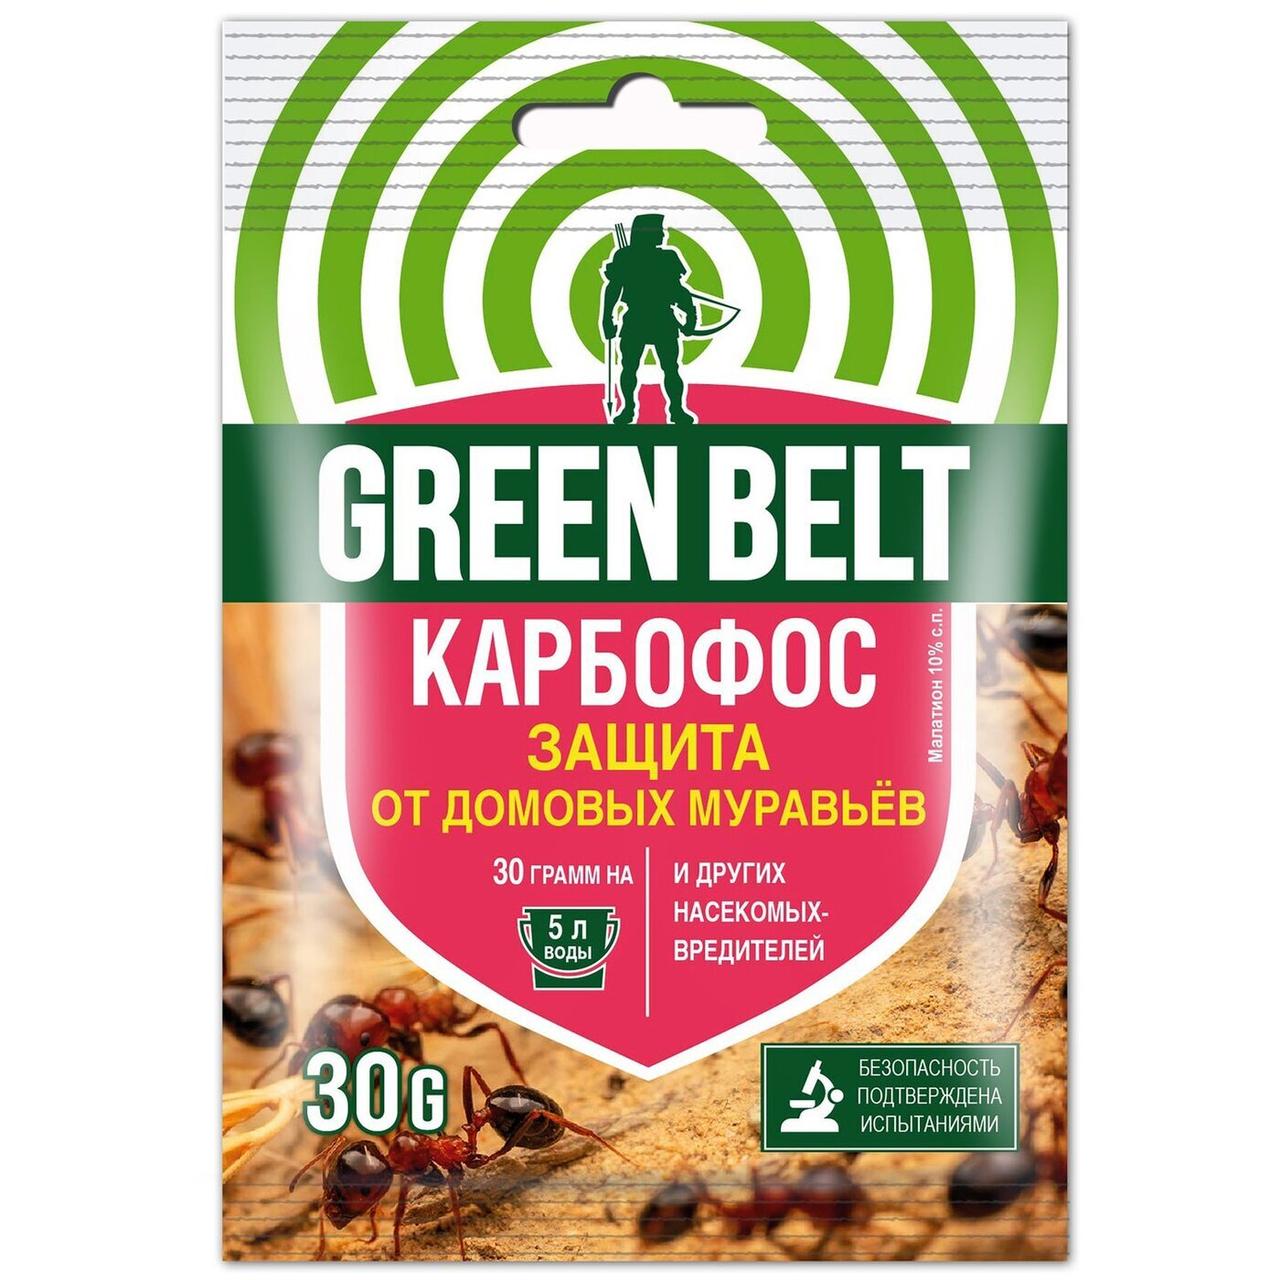 Карбофос, 30 г  Green Belt  Техноэкспорт, Россия